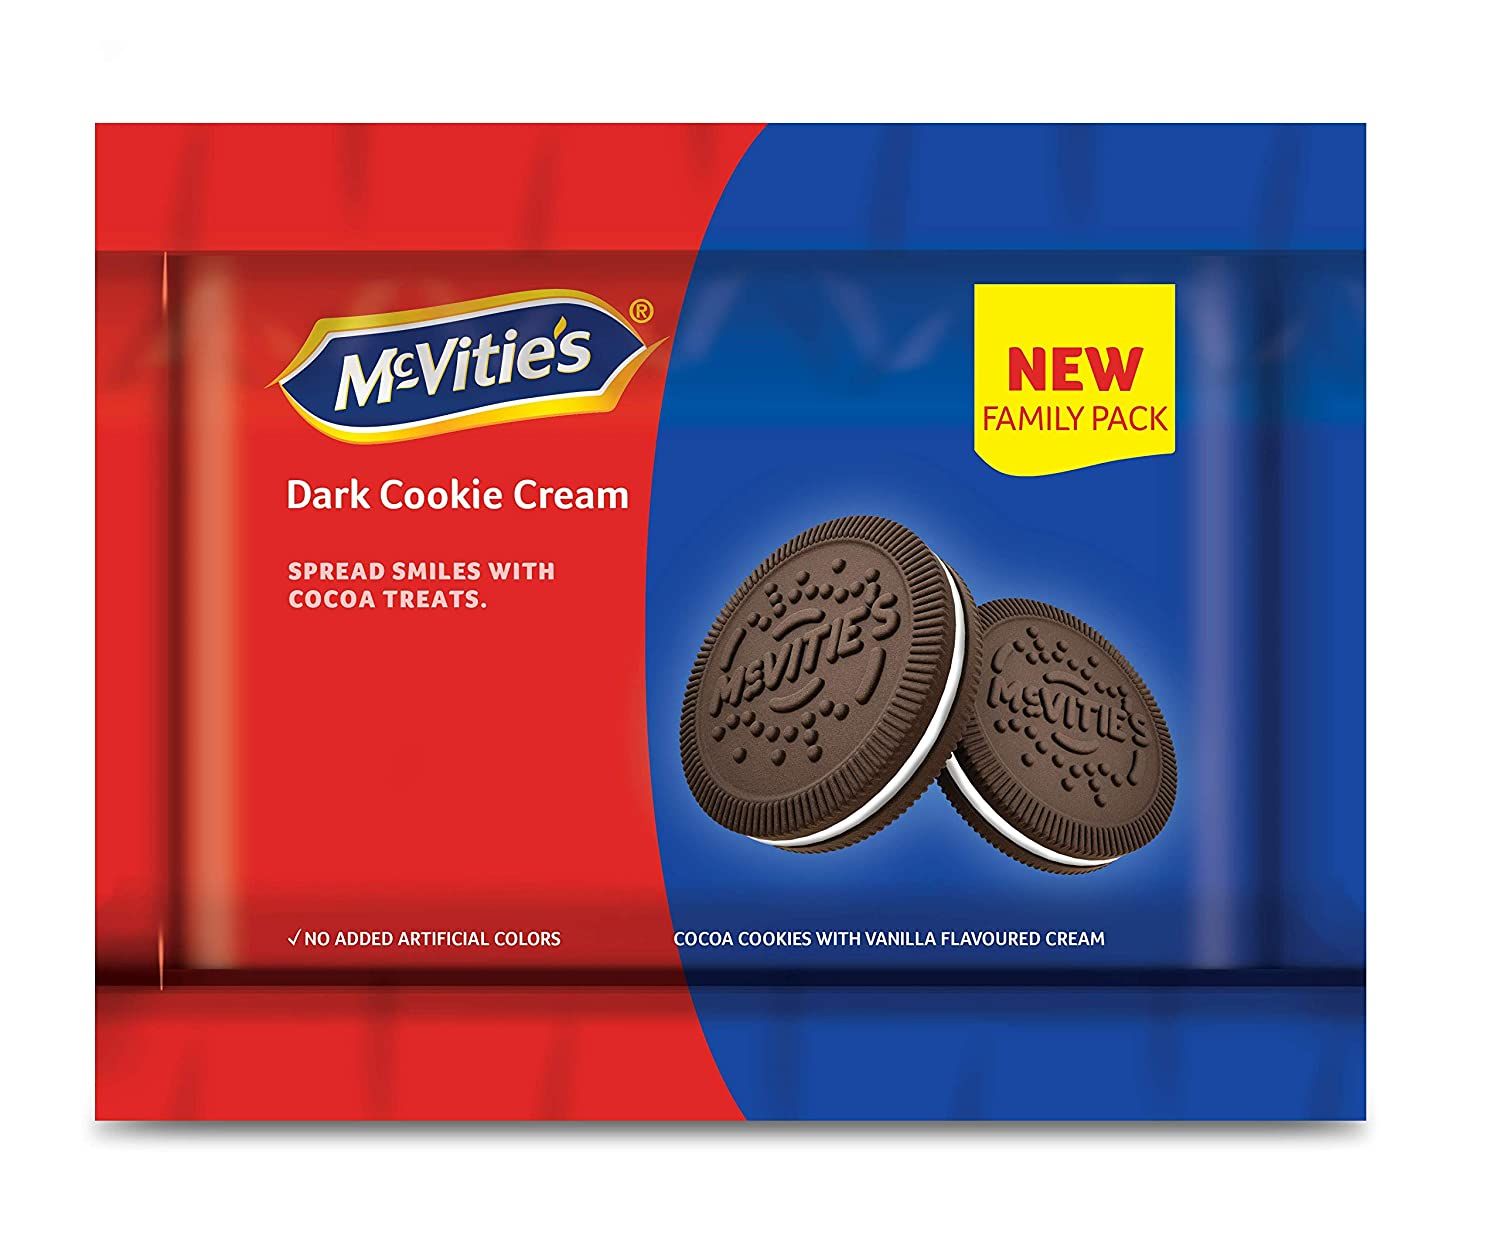 McVities Dark Cookies Cream Image